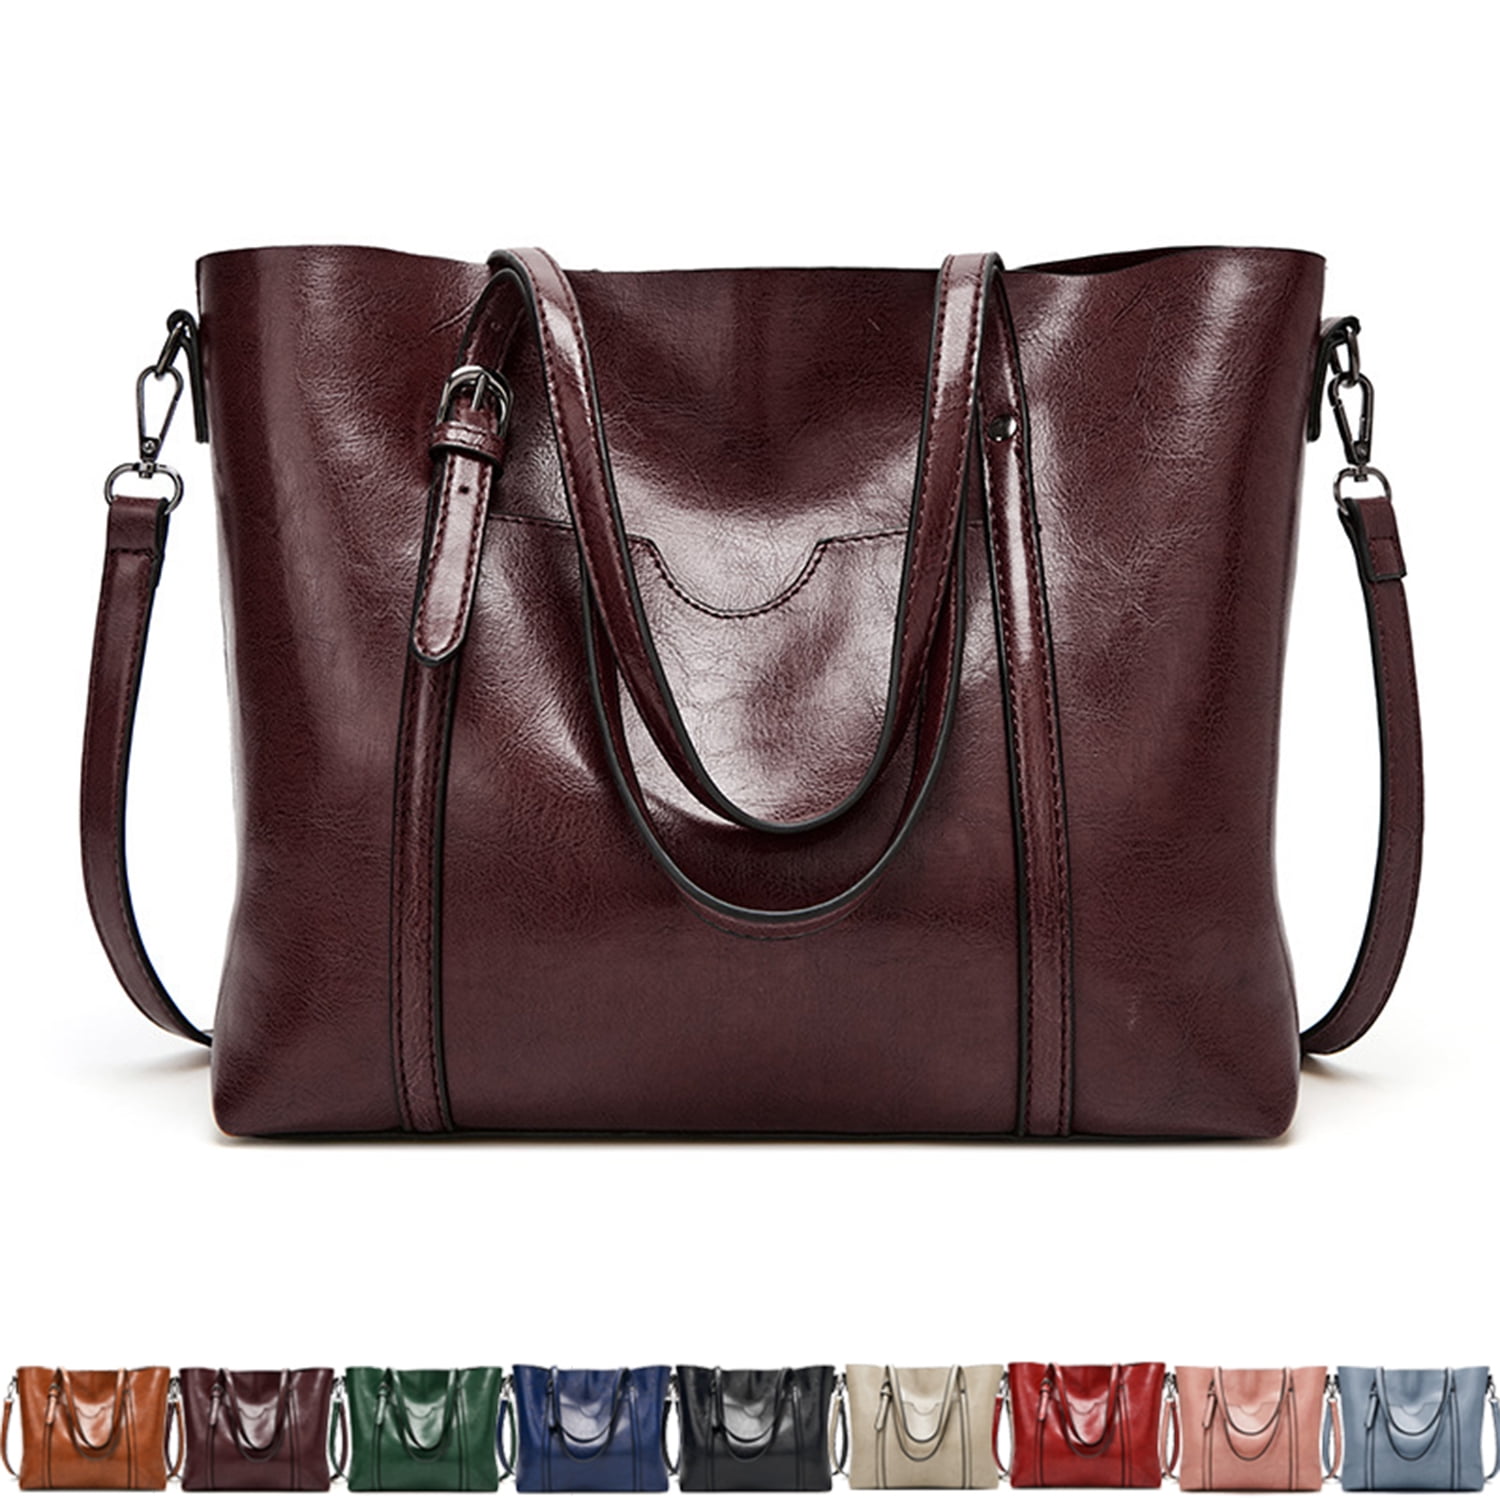 Handbags for Women PU Leather Satchel Purse Ladies Shoulder Bags Top Handle  Tote Bag for Ladies Girls Gifts,Red - Walmart.com